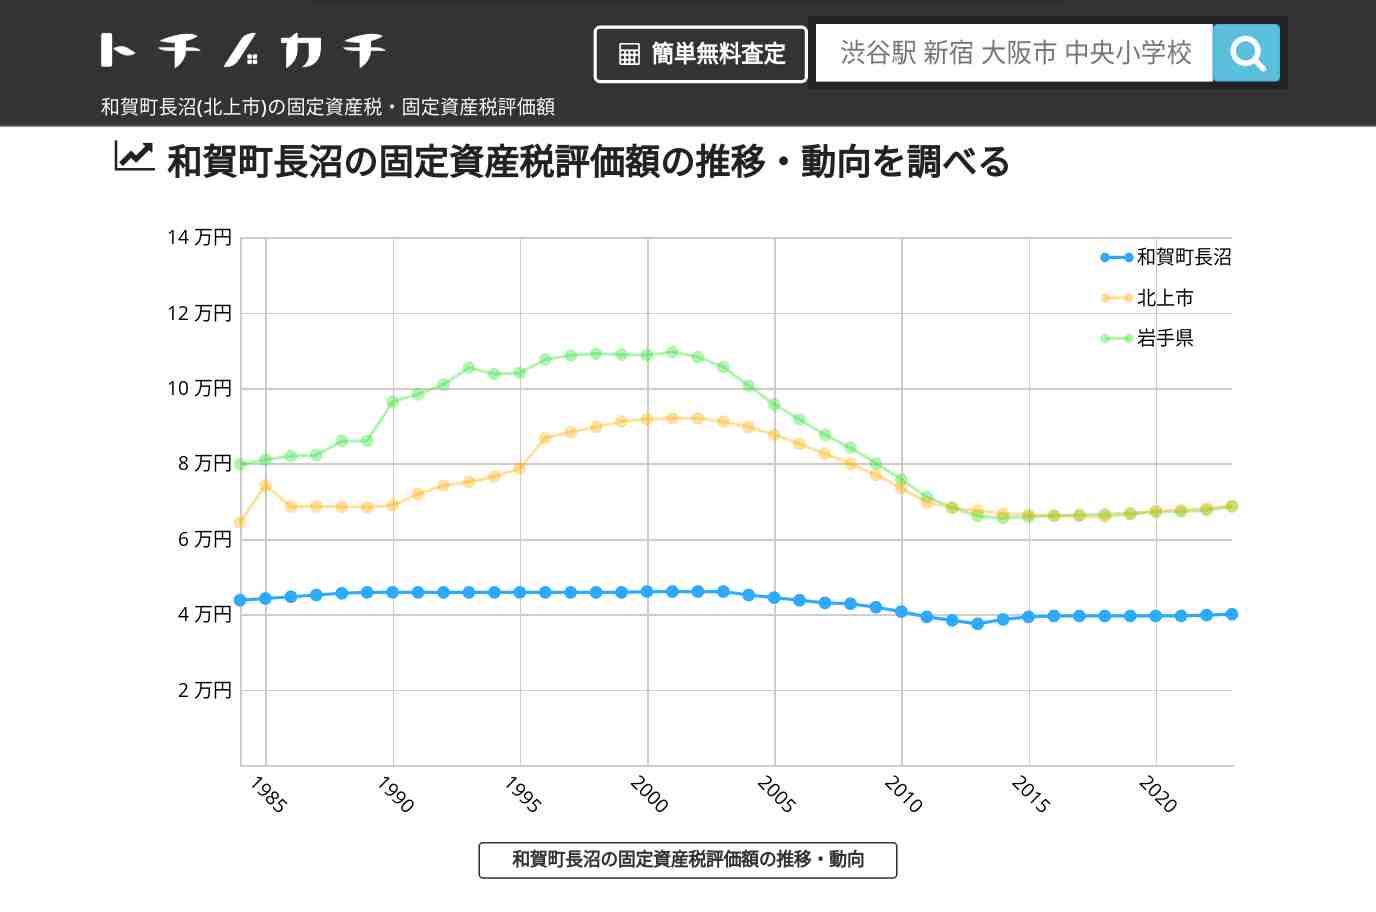 和賀町長沼(北上市)の固定資産税・固定資産税評価額 | トチノカチ